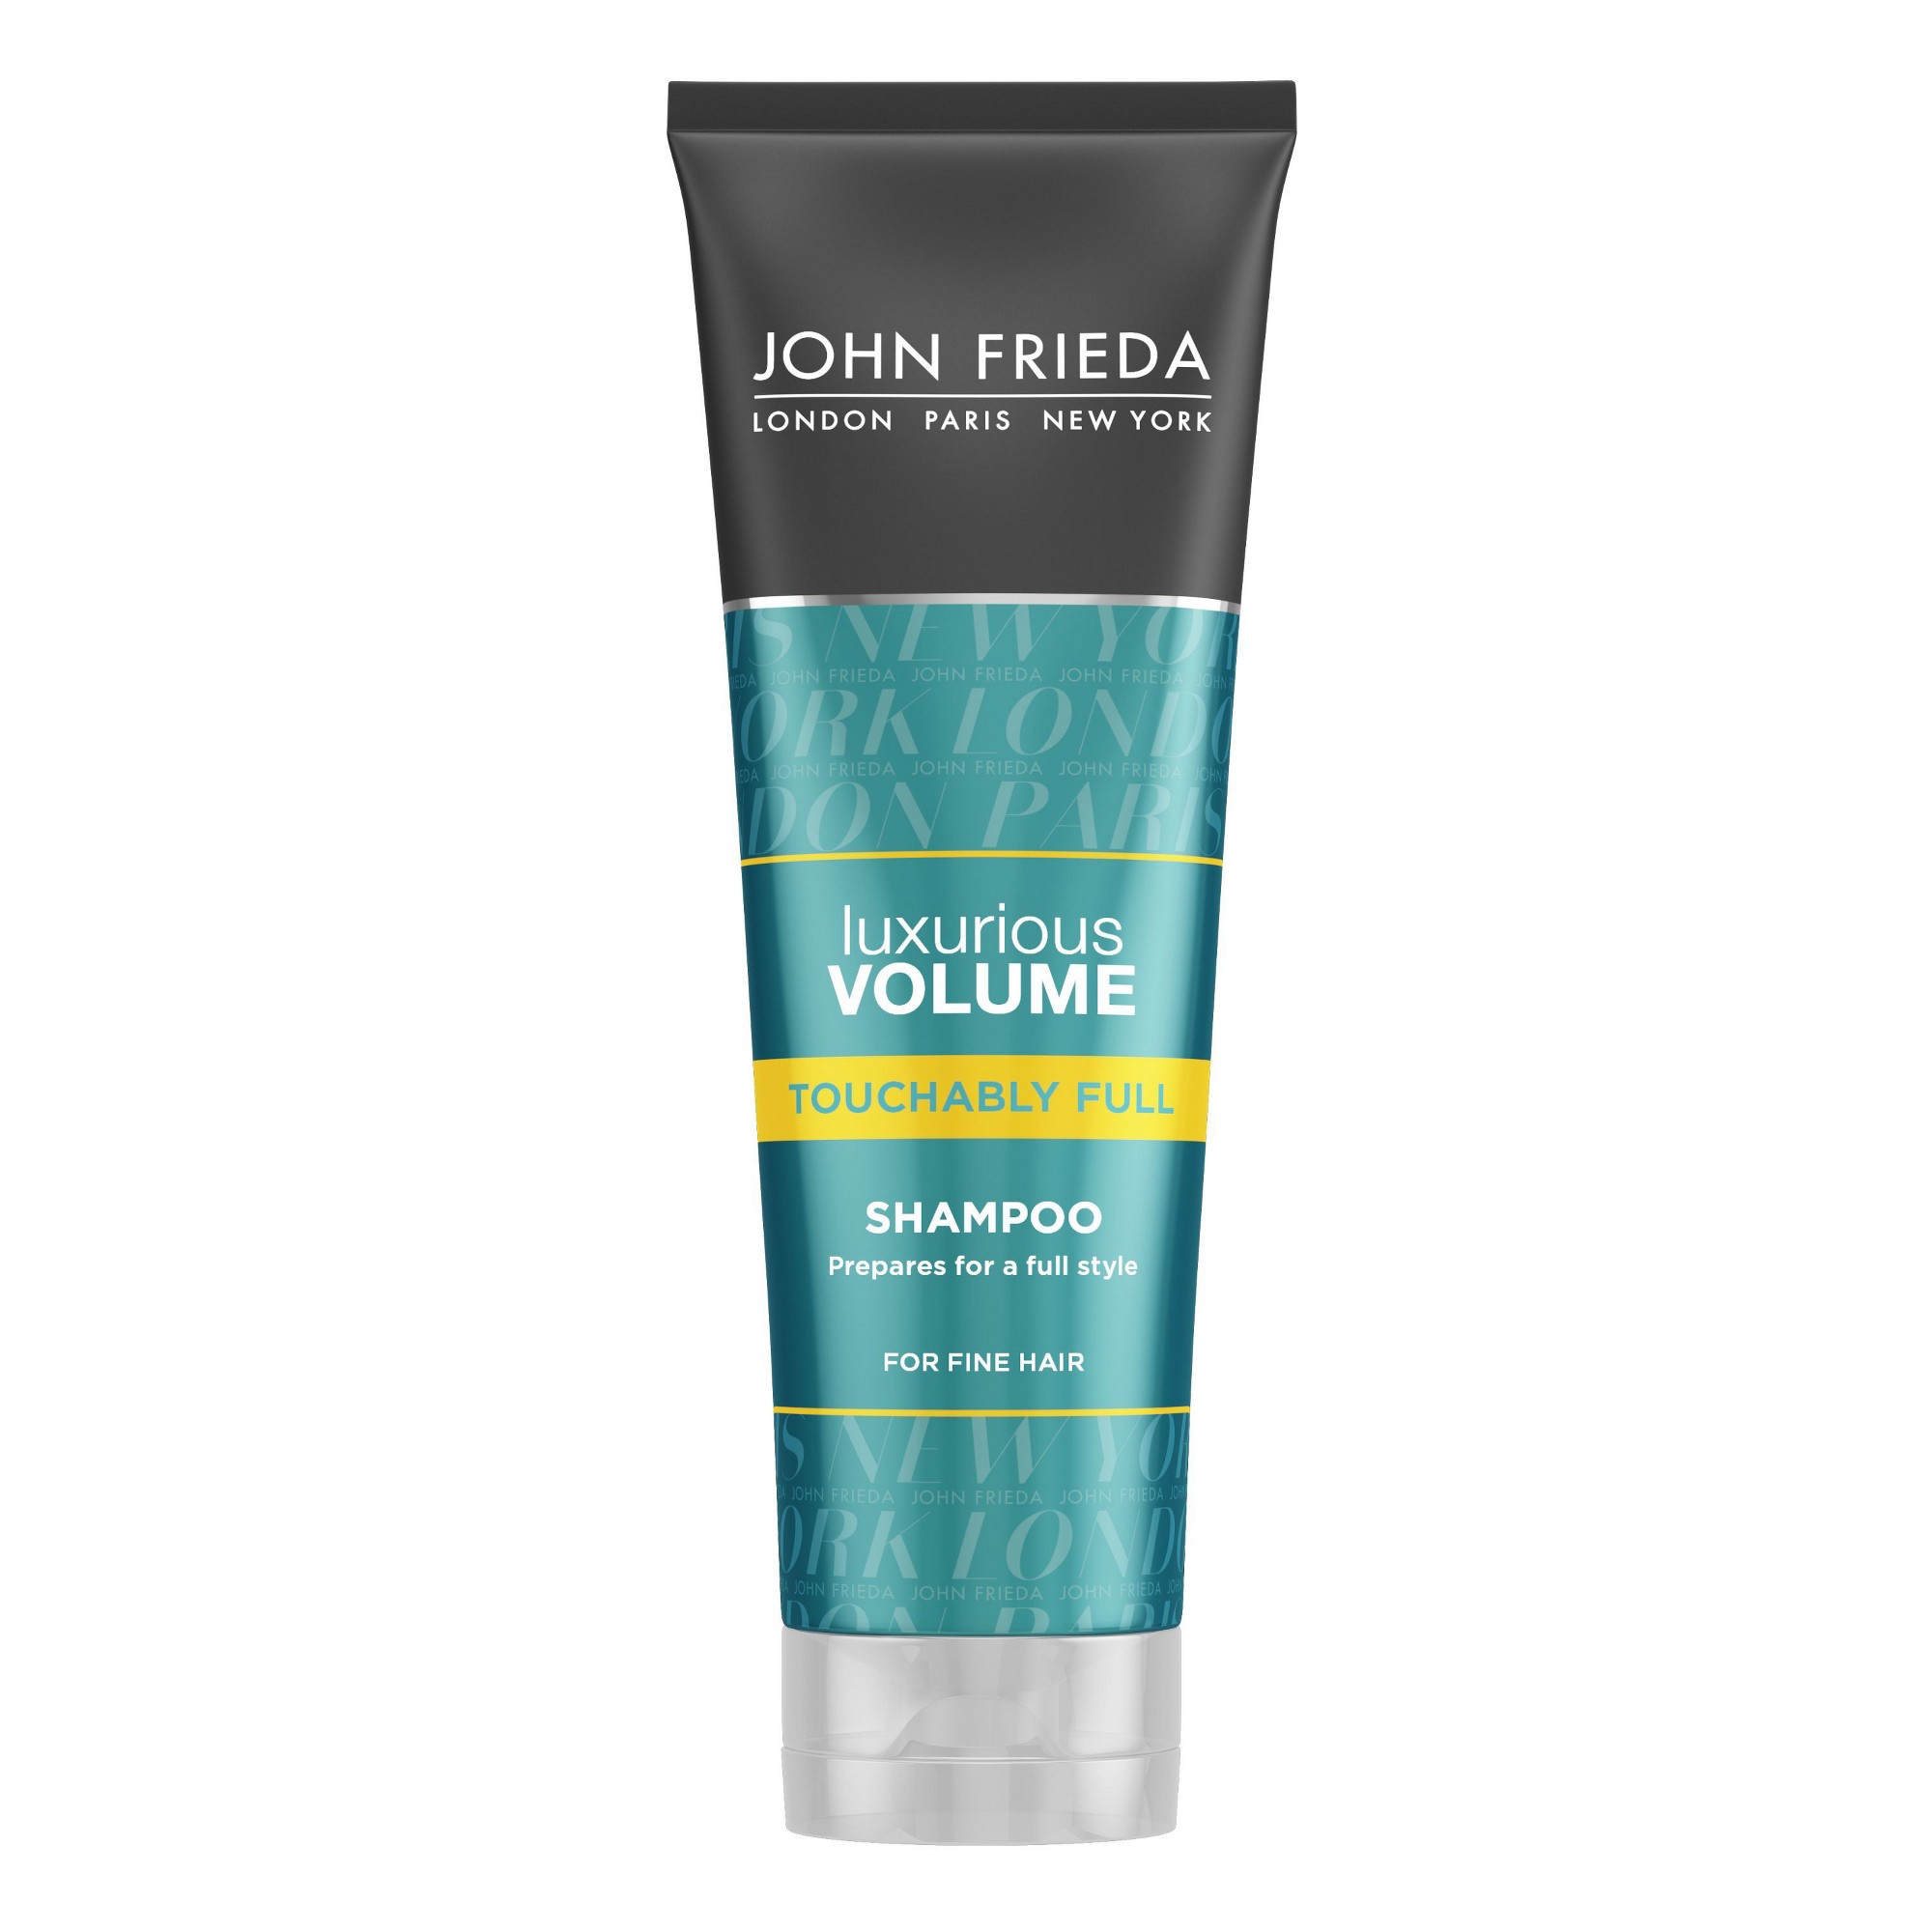 John Frieda Luxurious Volume Touchably Full Shampoo - 8.45 fl oz